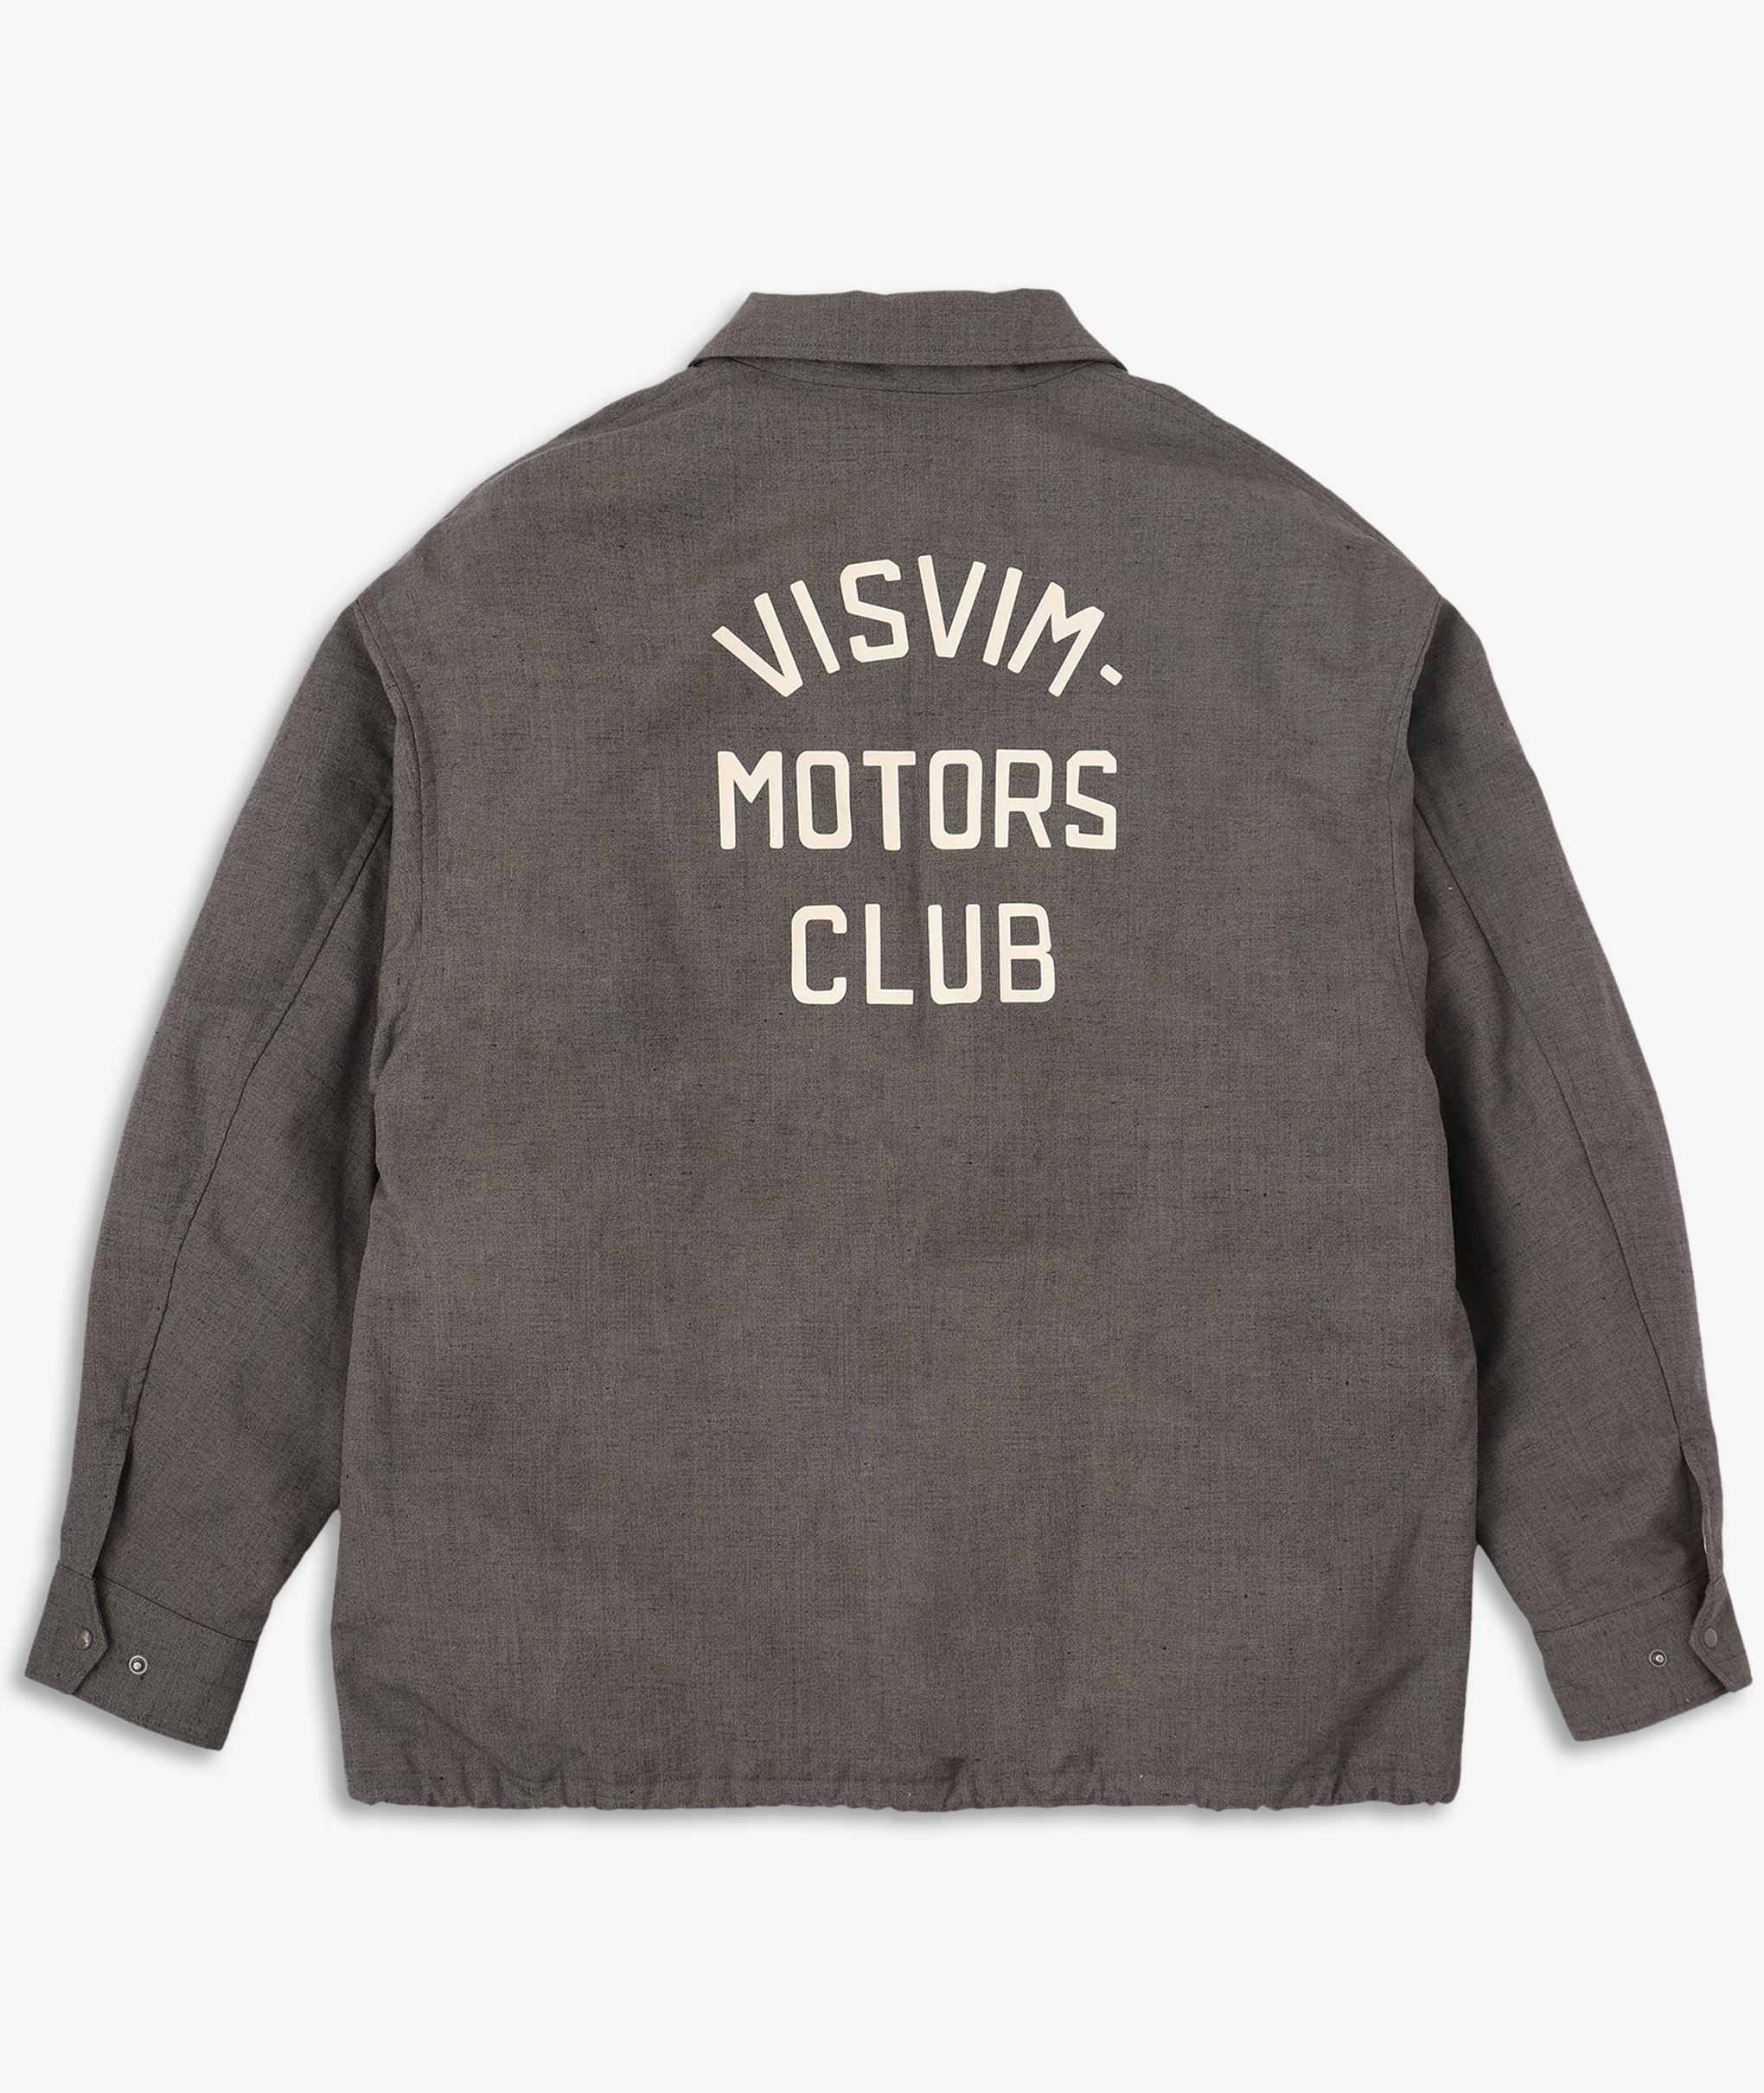 Norse Store | Shipping Worldwide - Visvim Motors Club Coach Down